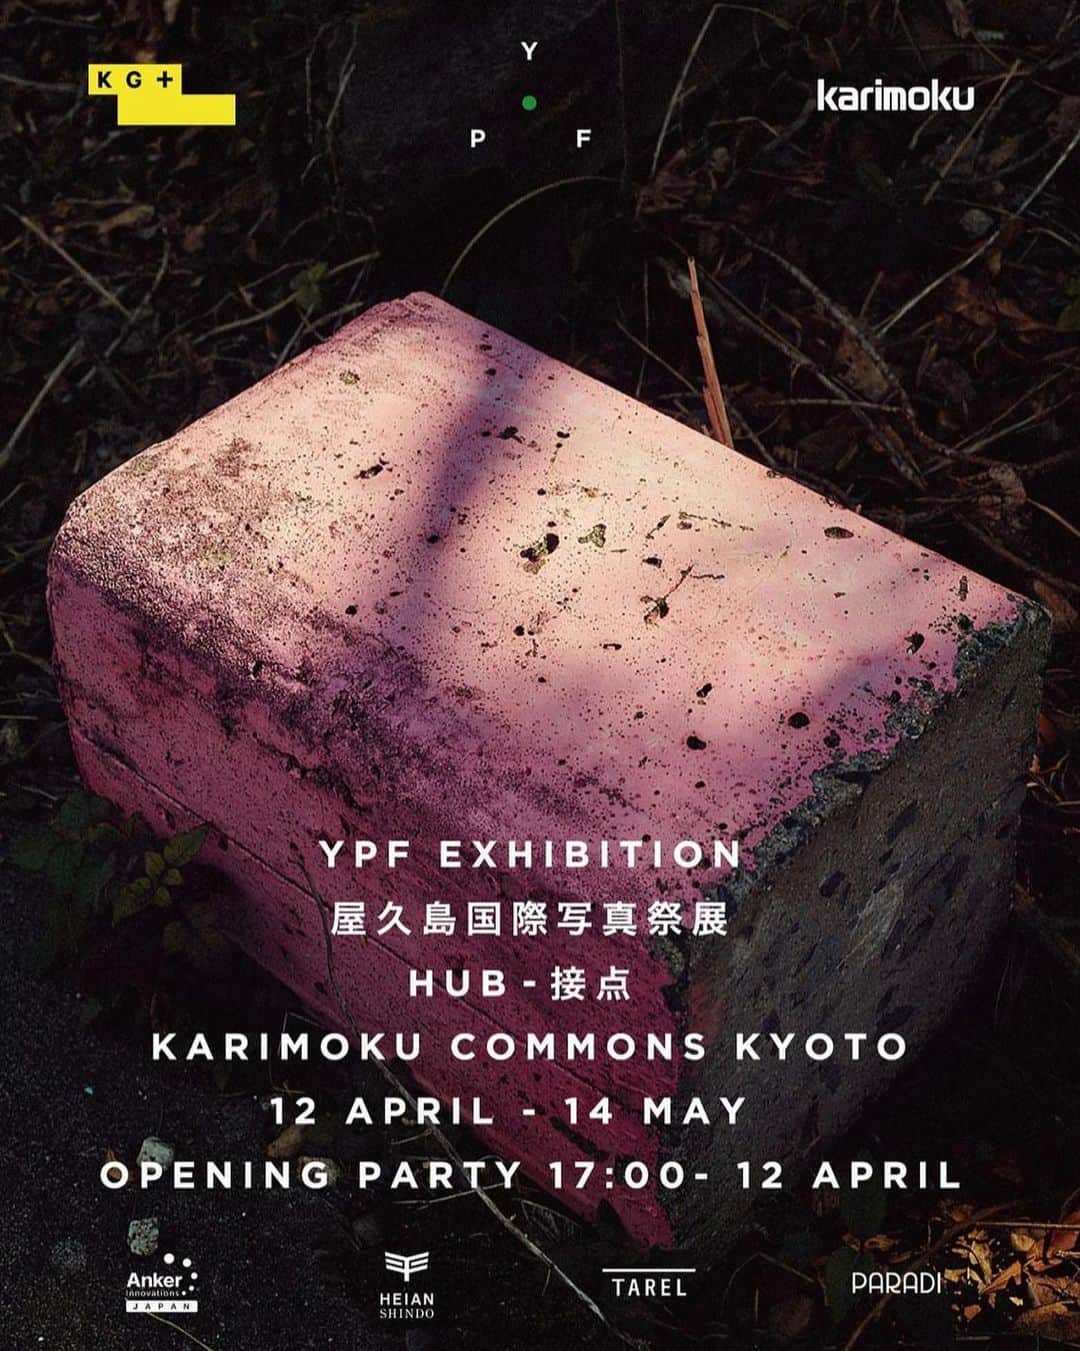 柏田テツヲのインスタグラム：「#Repost @yakushima_photo_festival with @use.repost ・・・ NPO法人屋久島国際写真祭は、2023年4月12日(水)～5月14日(日)の間、KYOTOGRAPHIE サテライトイベント KG+ に参加いたします。  屋久島国際写真祭展 YPF Exhibition KG＋2023 HUB - 接点  会期：2023年4月12日ー5月14日 会場：Karimoku Commons Kyoto 住所：〒604-8182 京都府京都市中京区大阪材木町６８５−２ 展示作家： Mauro Mongiello、柏田テツヲ 主催：KG+ 共催：NPO法人屋久島国際写真祭 協力：Anker JAPAN株式会社、平安伸銅工業株式会社、屋久島八万寿茶園、TAREL、PARADI　本坊酒造株式会社屋久島伝承蔵 協賛：SANKARA HOTEL&SPA 屋久島、THE HOTEL YAKUSHIMA、屋久島八万寿茶園、まつばんだグループ  OPENING PARTY｜オープニングパーティー  日時：2023年4月12日 17:00-20:00 会場：Karimoku Commons Kyoto 入場：無料、飲食は随時キャッシュオン制 お問い合わせ先：ypf.photos@gmail.cpm  Karimoku Commons Kyoto を会場に、京都市からはワインバー「TAREL」によるワイン、兵庫県城崎から「PARADI」による軽食をご用意しオープニングパーティーを開催いたします。 ドリンクを片手に、木の温かさを感じるkarimoku Communs Kyotoの家具と、屋久島で制作された日仏の作家による写真による対話を楽しみ、コミニケーションが生まれる場を創造します。 皆様のご来場お待ちしております。  詳細はこちら:https://kgplus.kyotographie.jp/exhibitions/2023/ypf/  #photoevent #kgplus2023 #yakushimaphotographyfestival #exhibition #artistinresidence #mauromongiello #tetsuokashiwada #karimokucommonskyoto #photoexhibition #unescoworldheritage #yakushimaisland #屋久島 #屋久島国際写真祭 #展覧会 #京都 #写真展 #滞在制作 #柏田テツヲ #マウロモンジエーロ #カリモクコモンズキョウト」